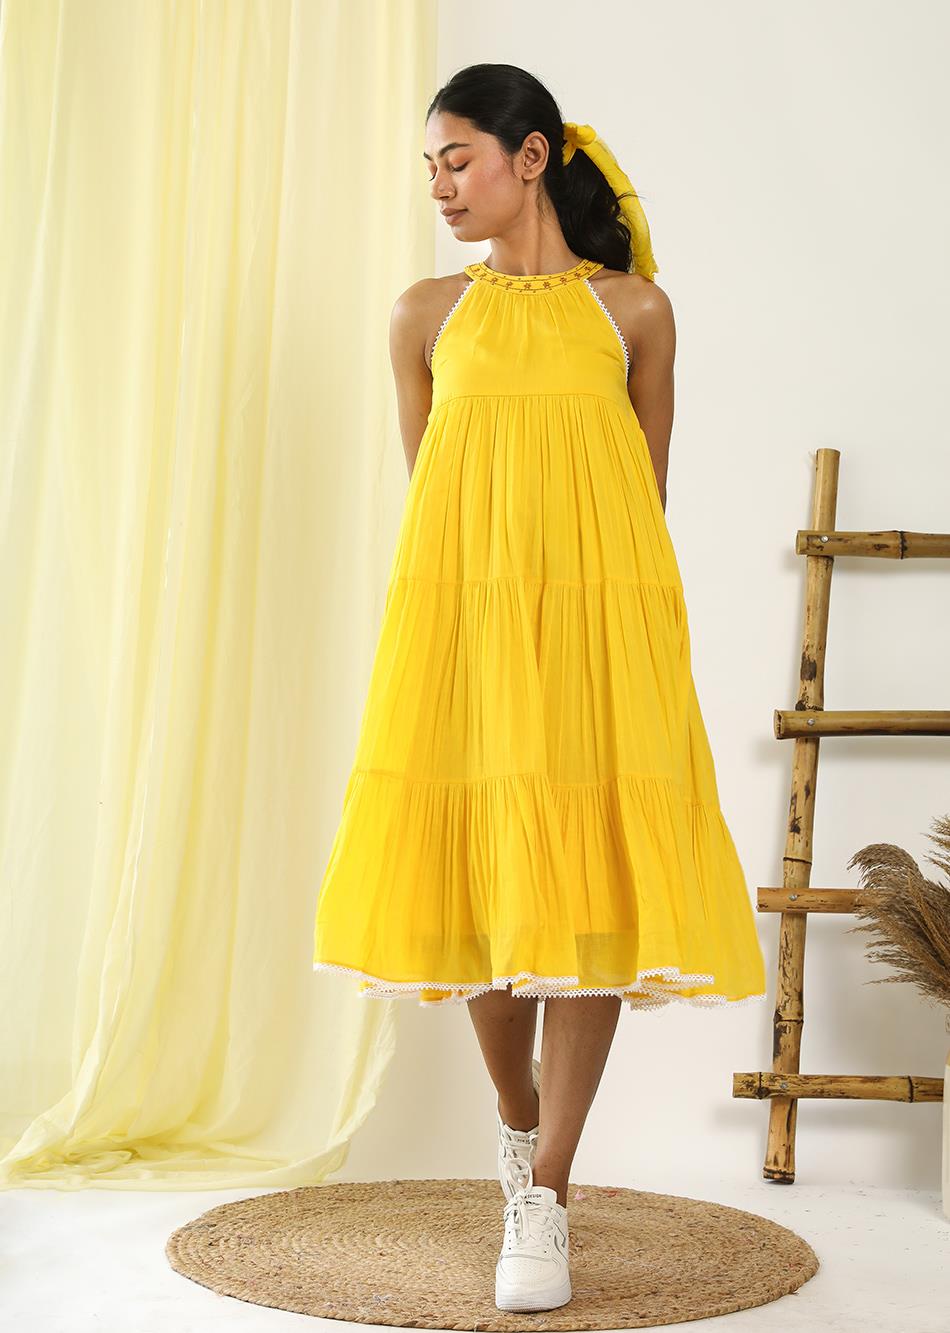 The Marigold Tiered Dress By Jovi Fashion